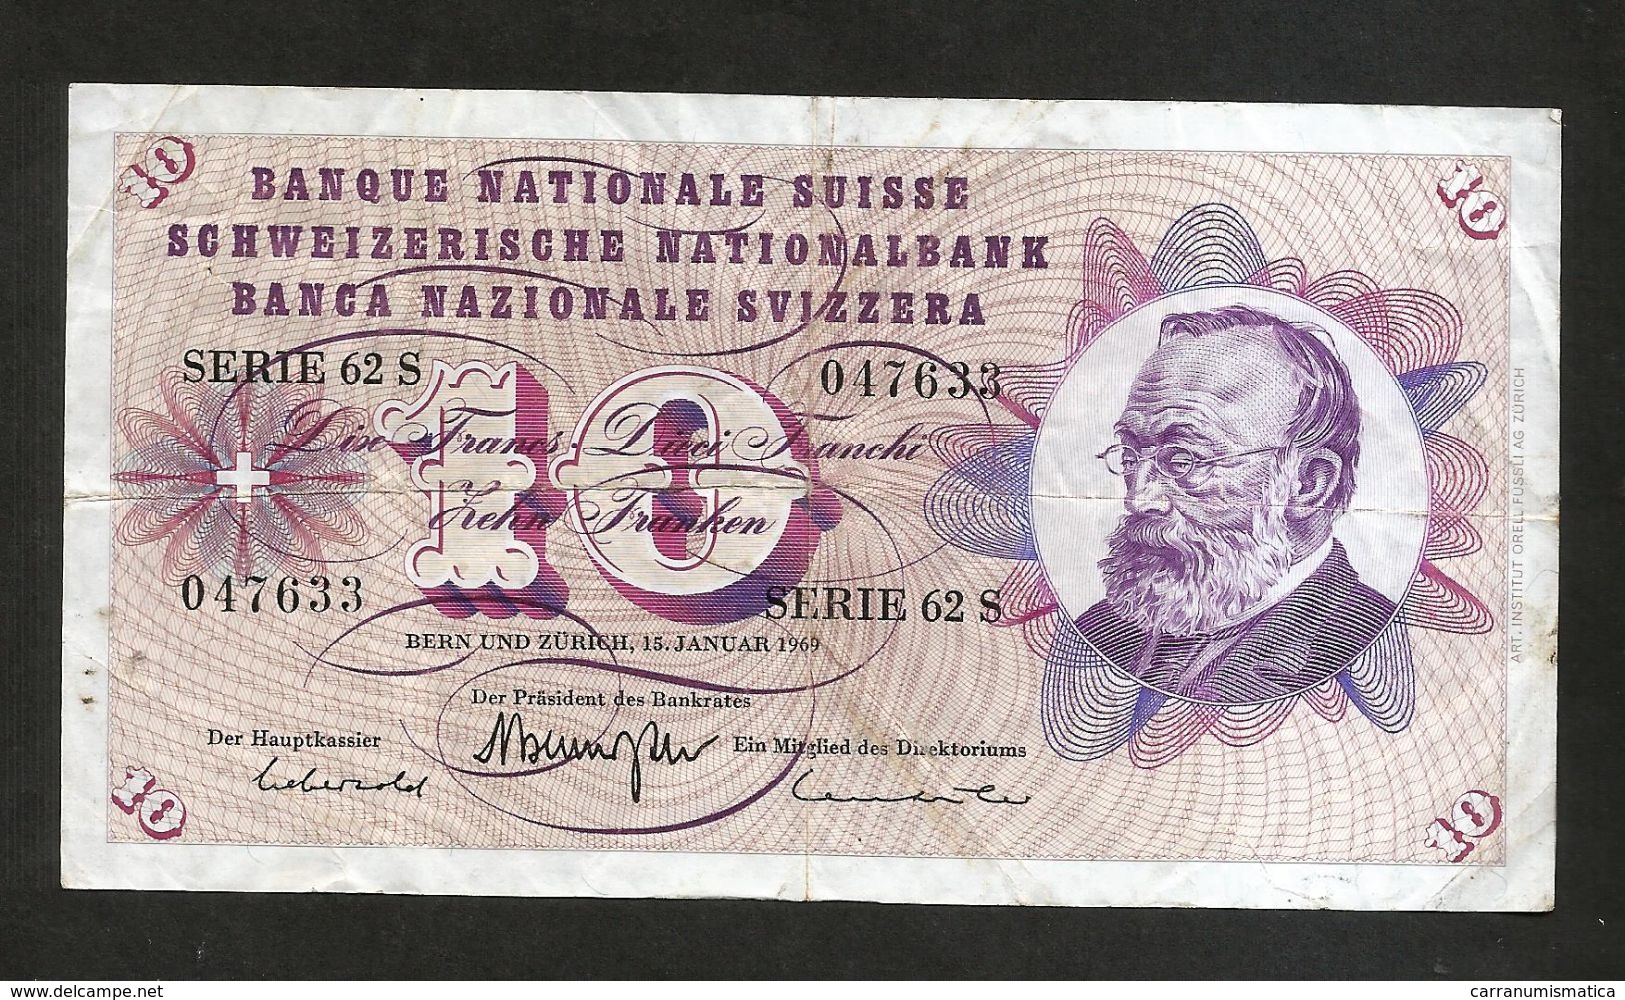 SVIZZERA / SUISSE / SWITZERLAND - NATIONAL BANK - 10 FRANCS / FRANKEN (1969) G. KELLER - Switzerland